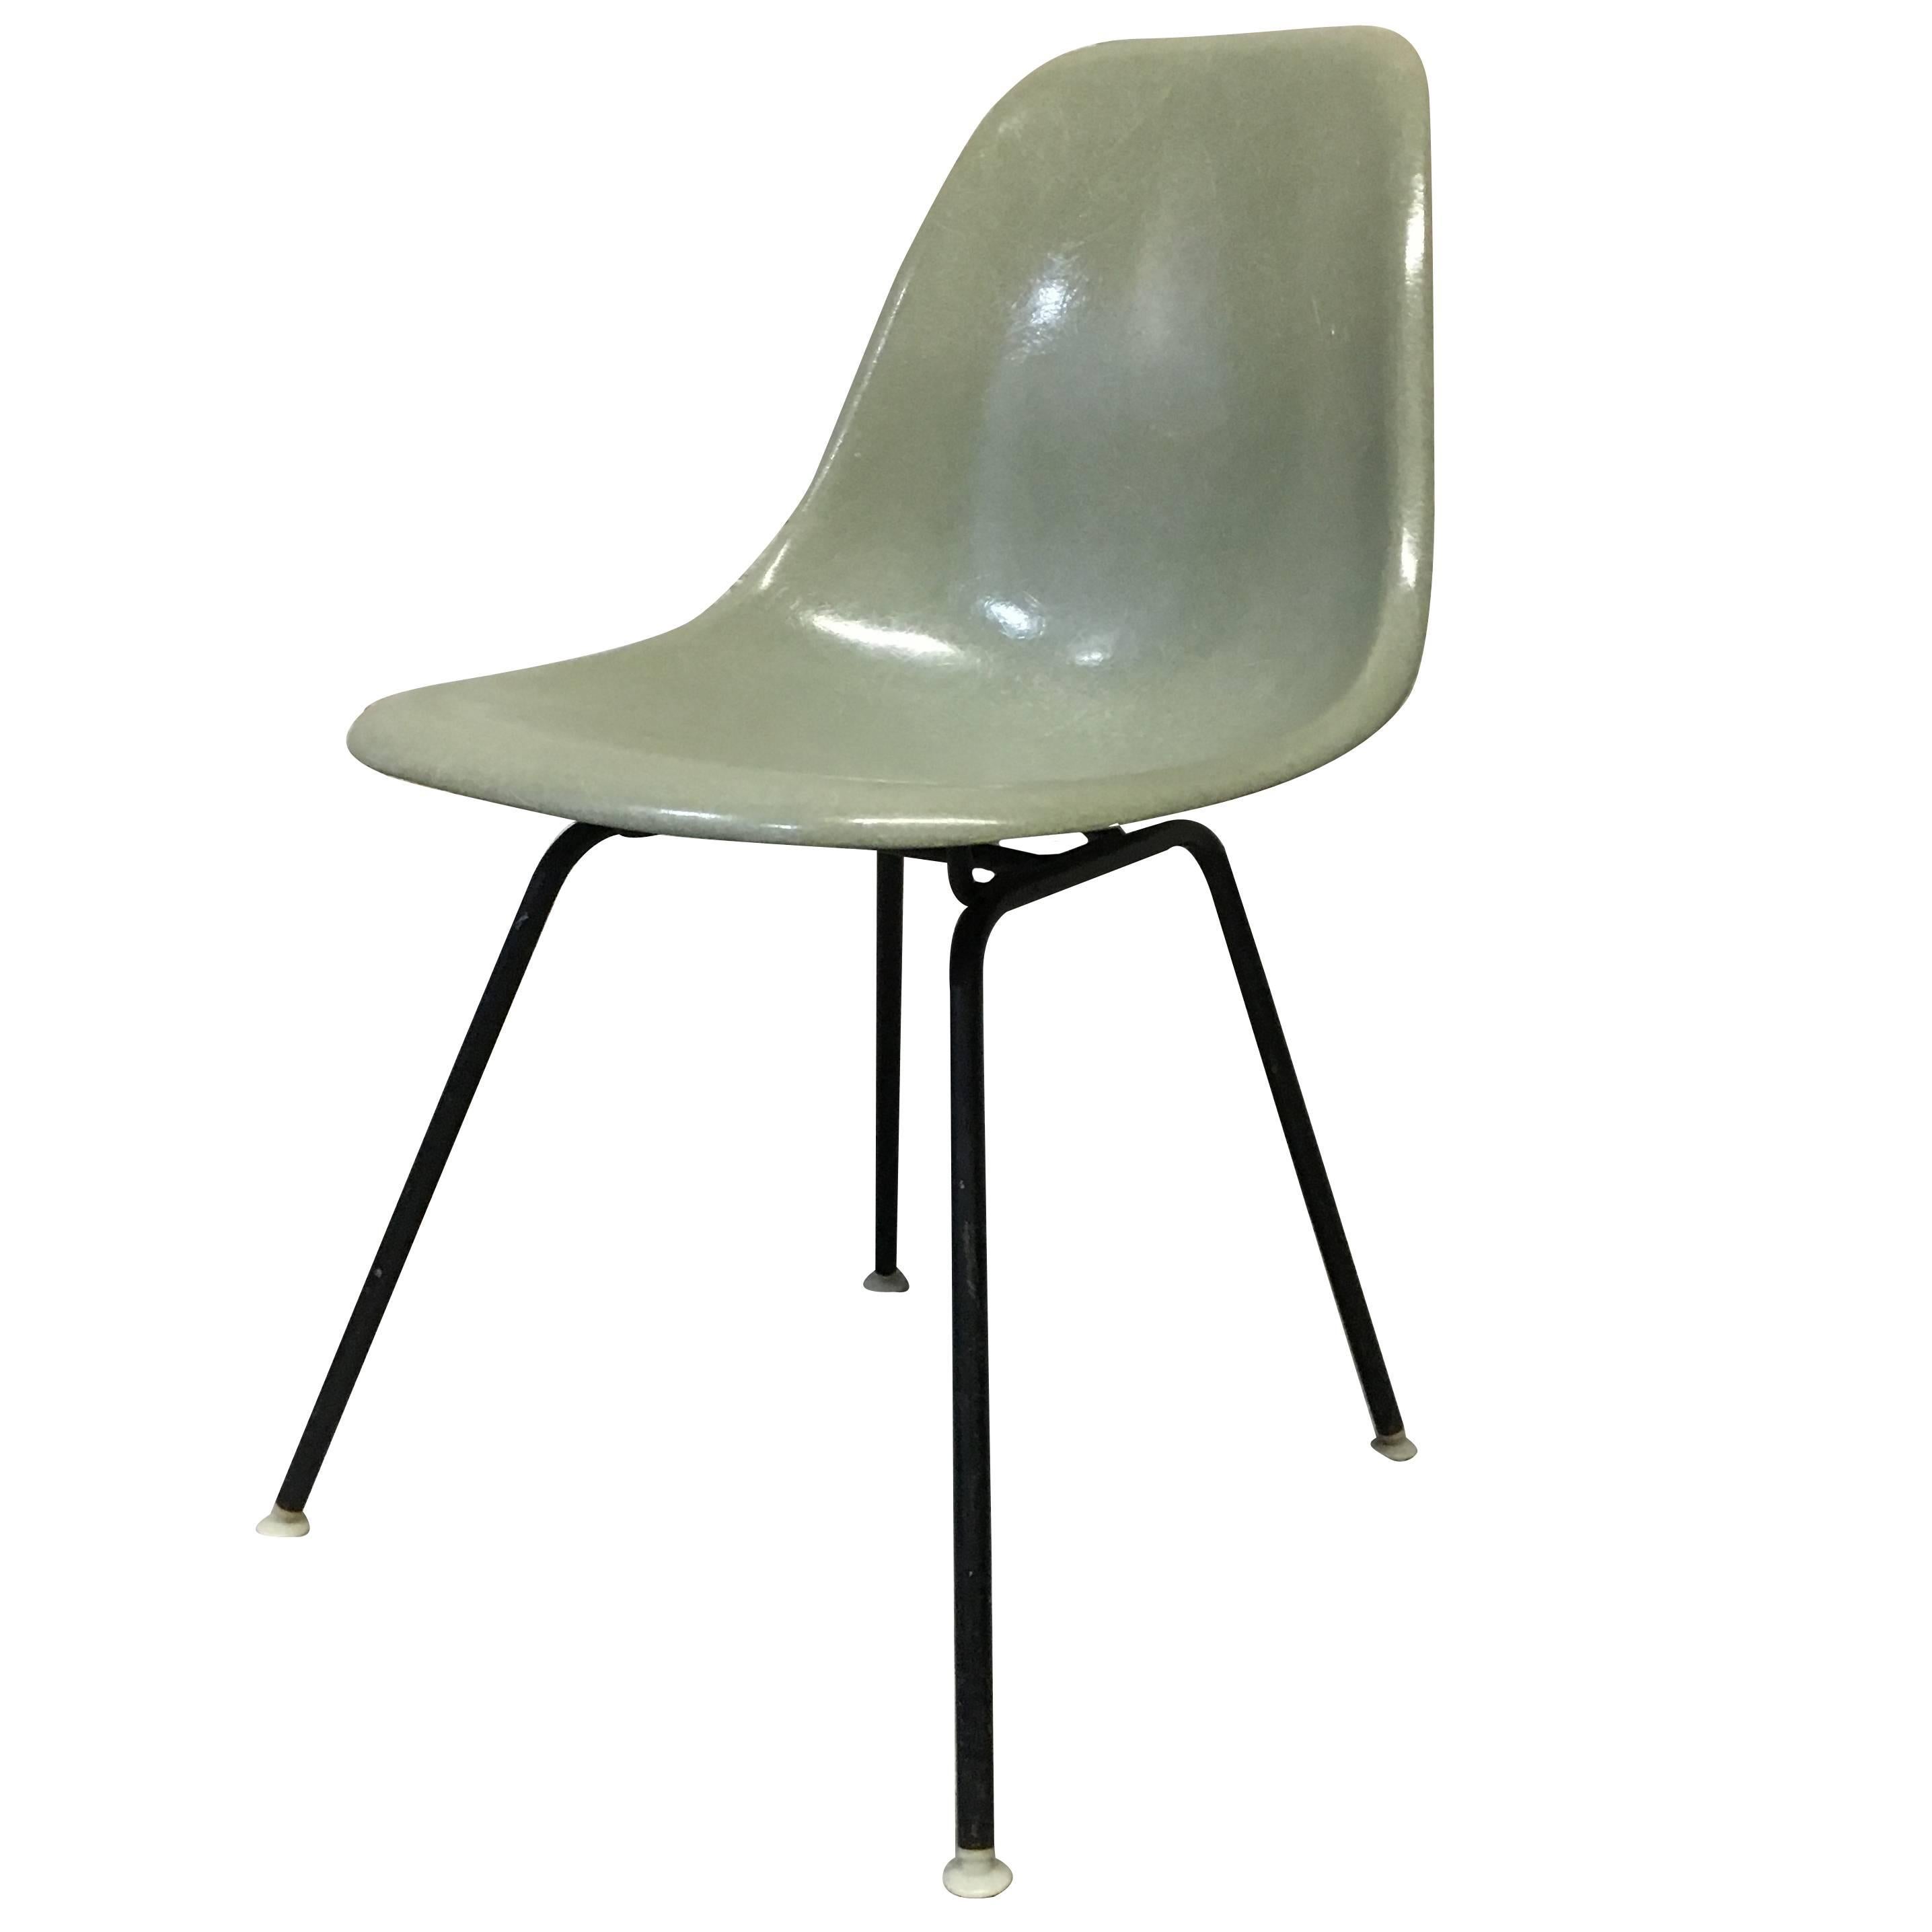 Set of four Herman Miller seafoam green fiberglass side chair (model DSX). Black H base with white nylon glides. Other bases available (Eiffel, dowel, rocker, low rod).